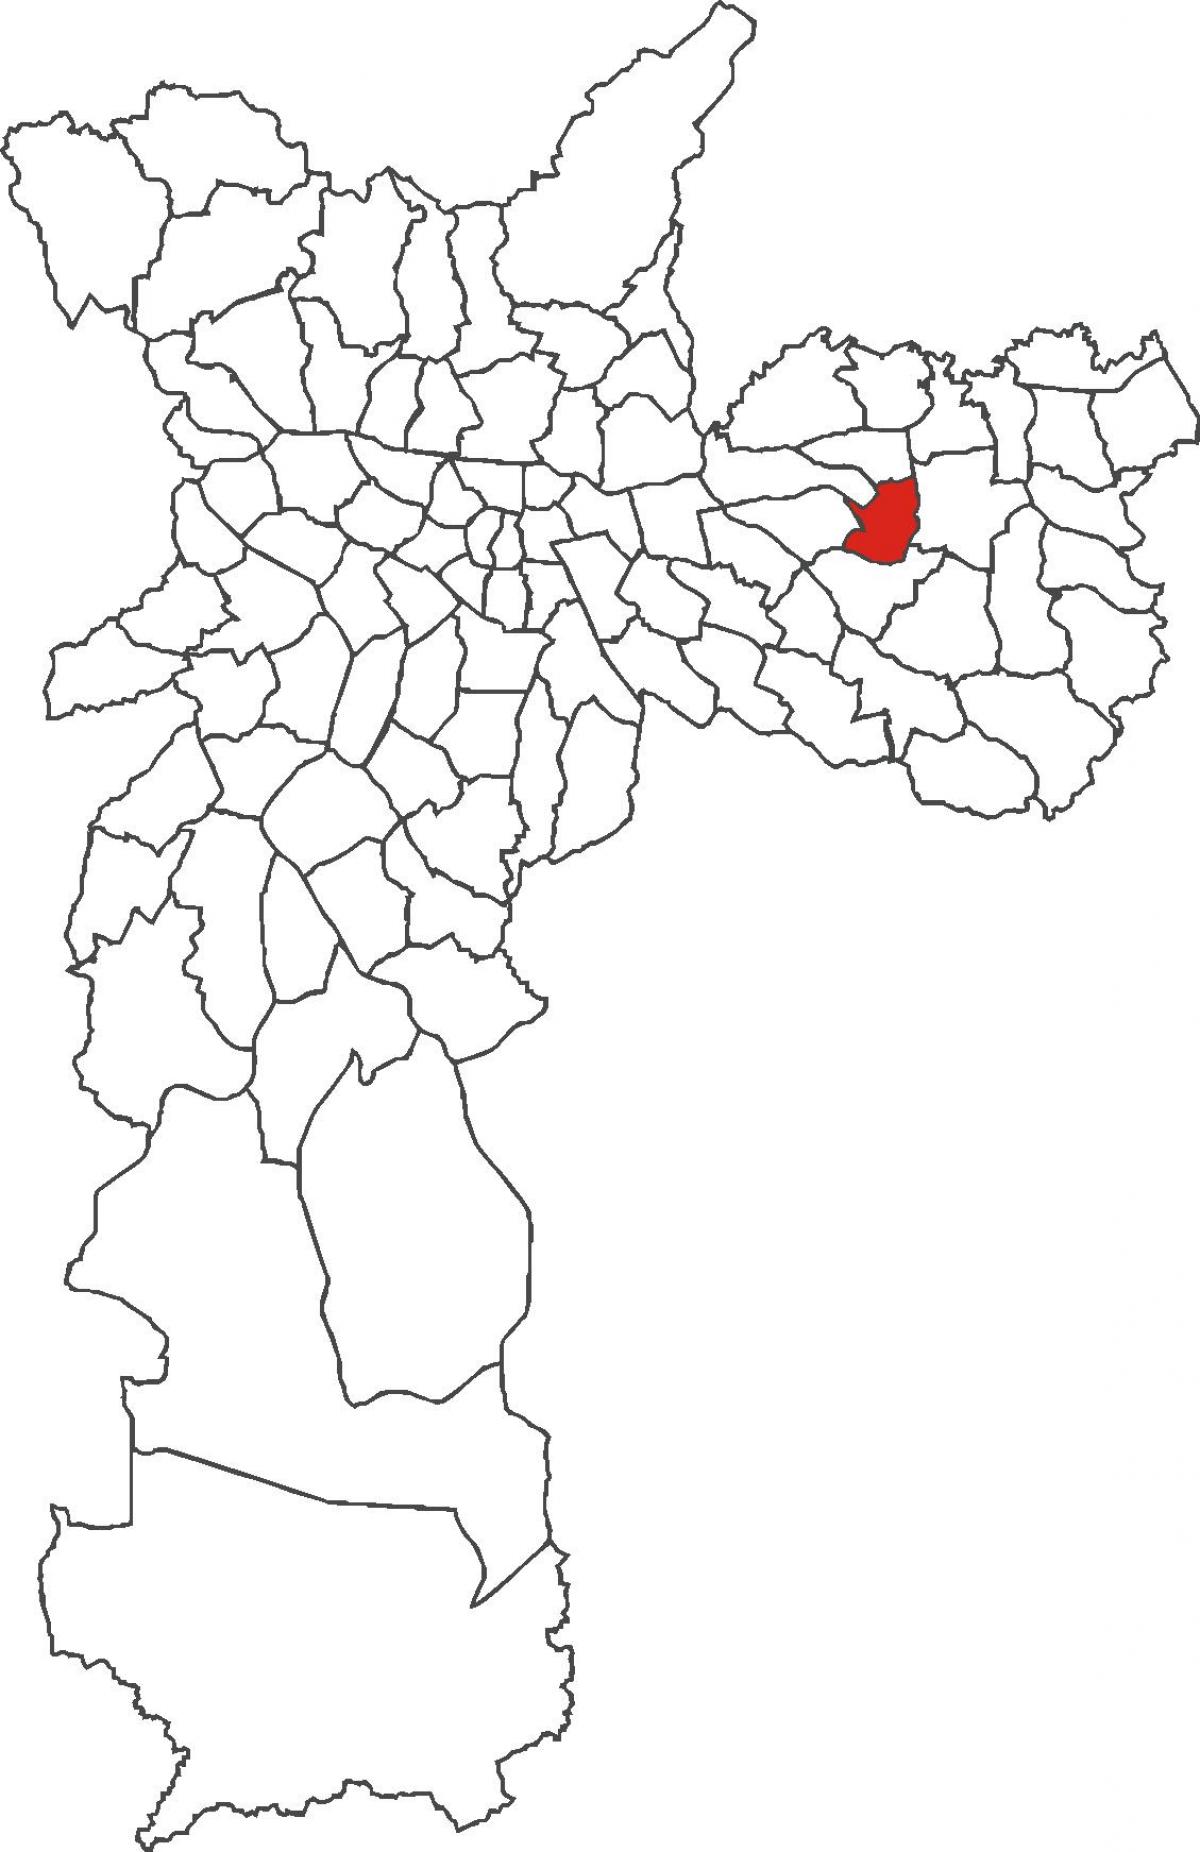 Mapa d'Artur Alvim districte